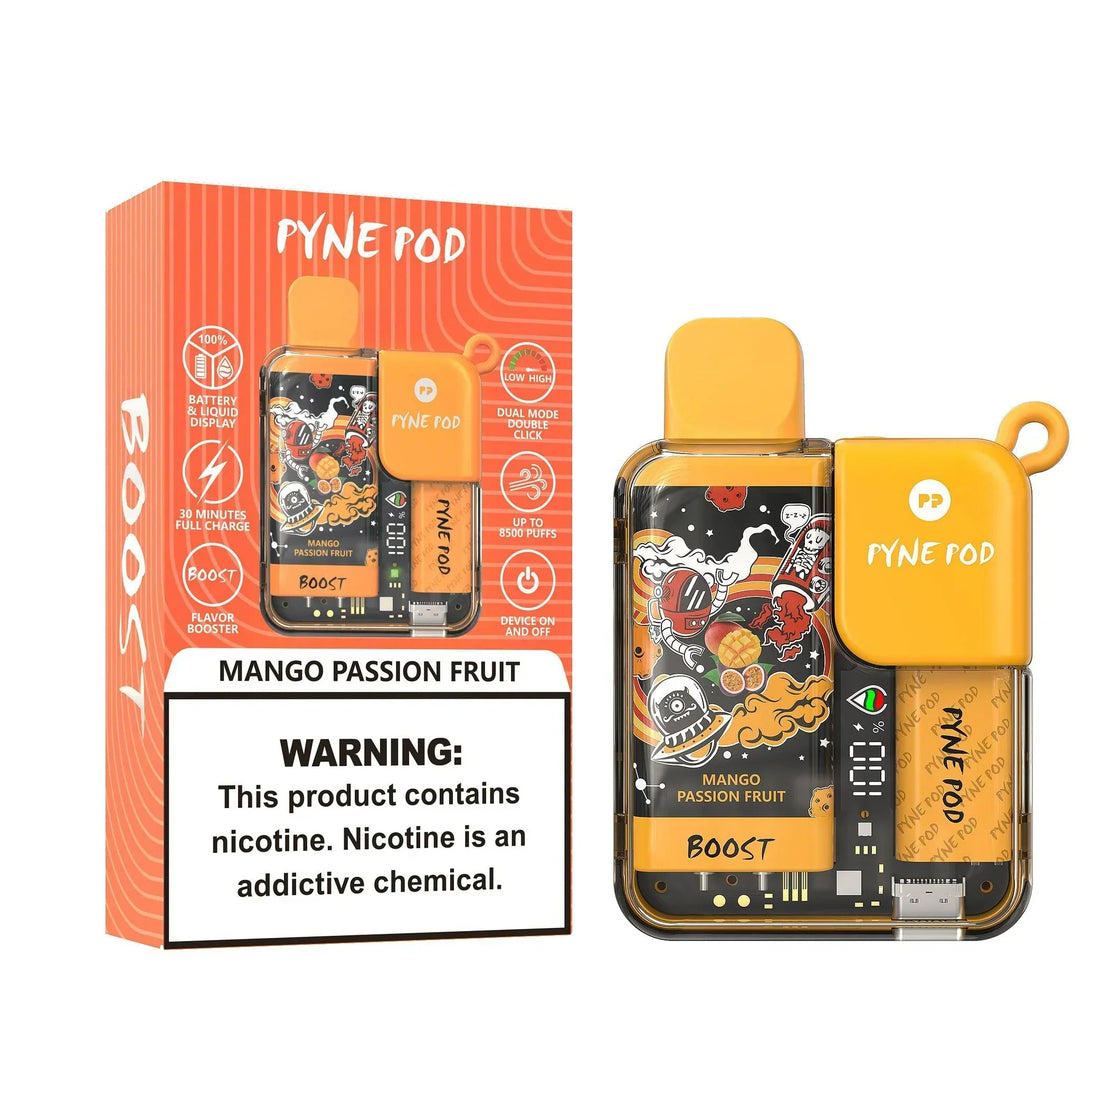 Pyne Pod Boost 8500 Puffs Disposable Vape (Box of 5)